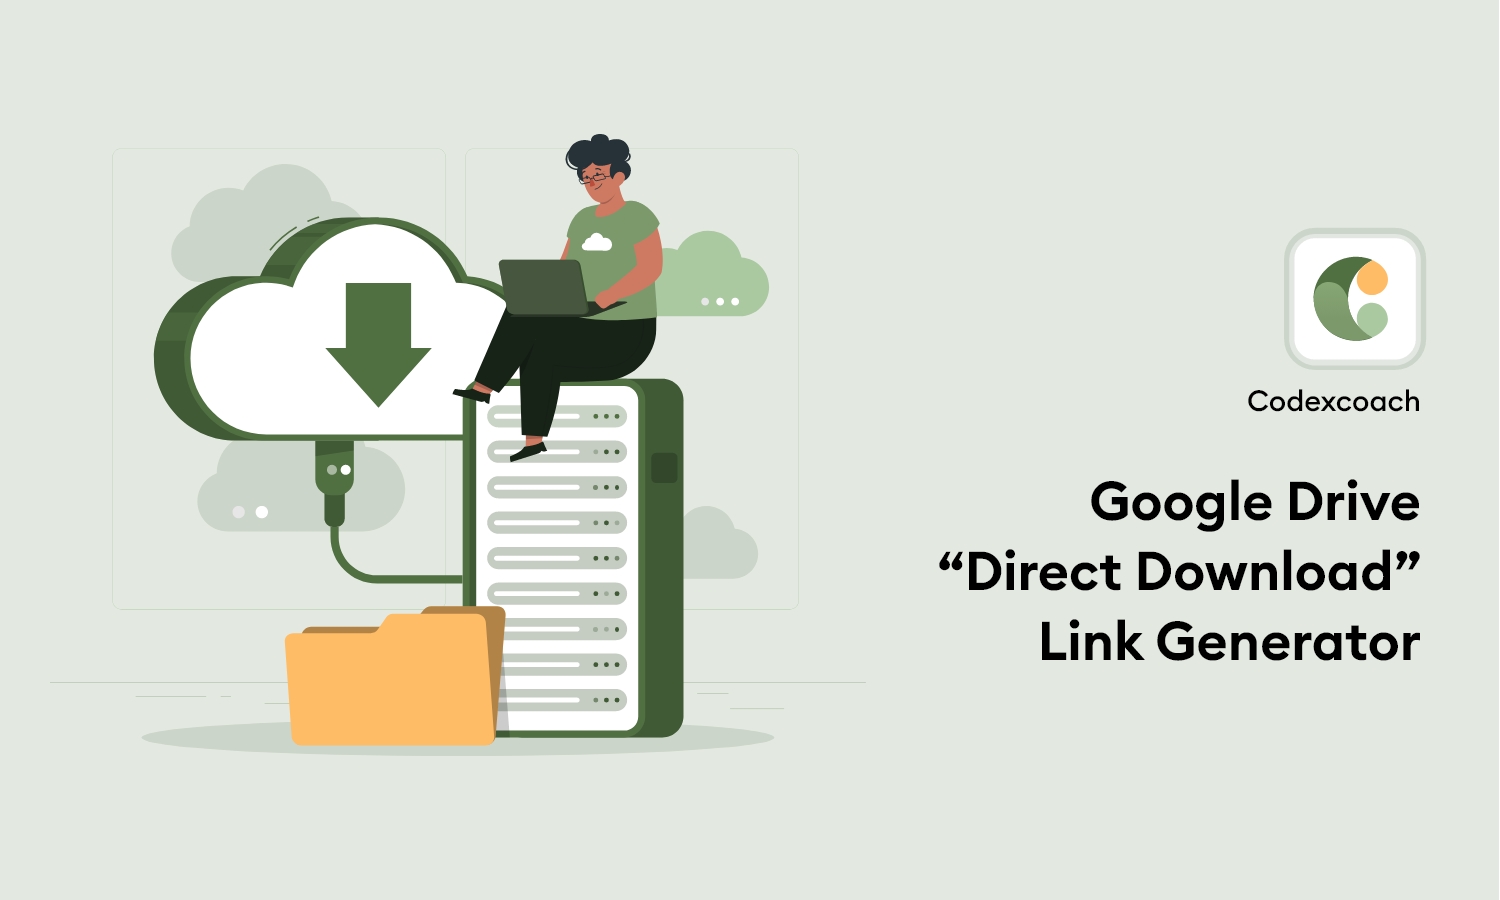 Google Drive “Direct Download” Link Generator